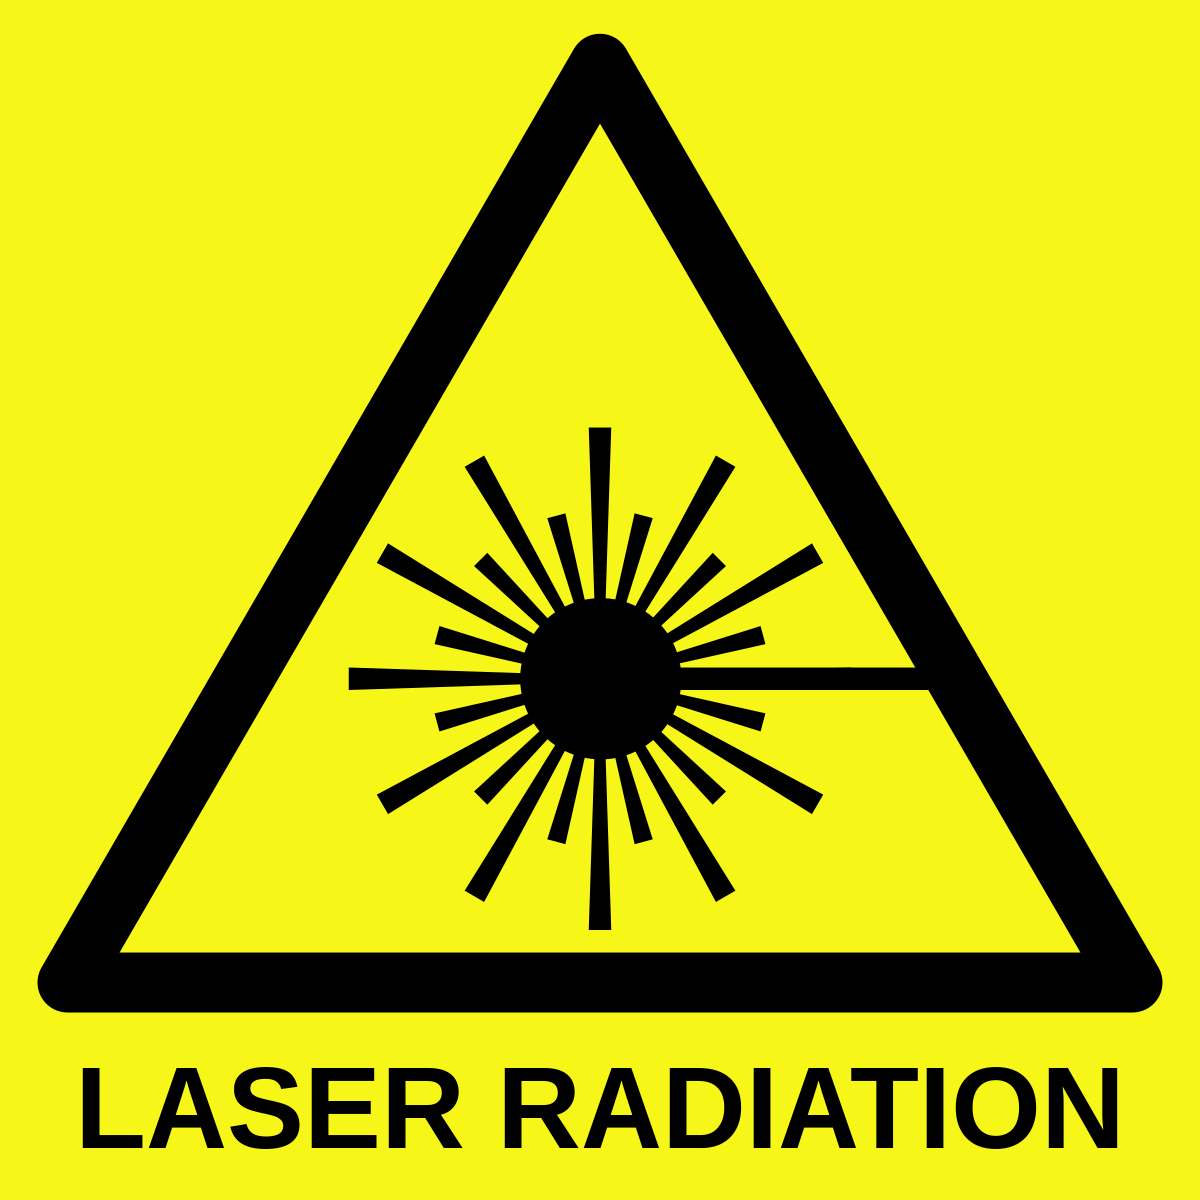 Laser safety - Wikipedia